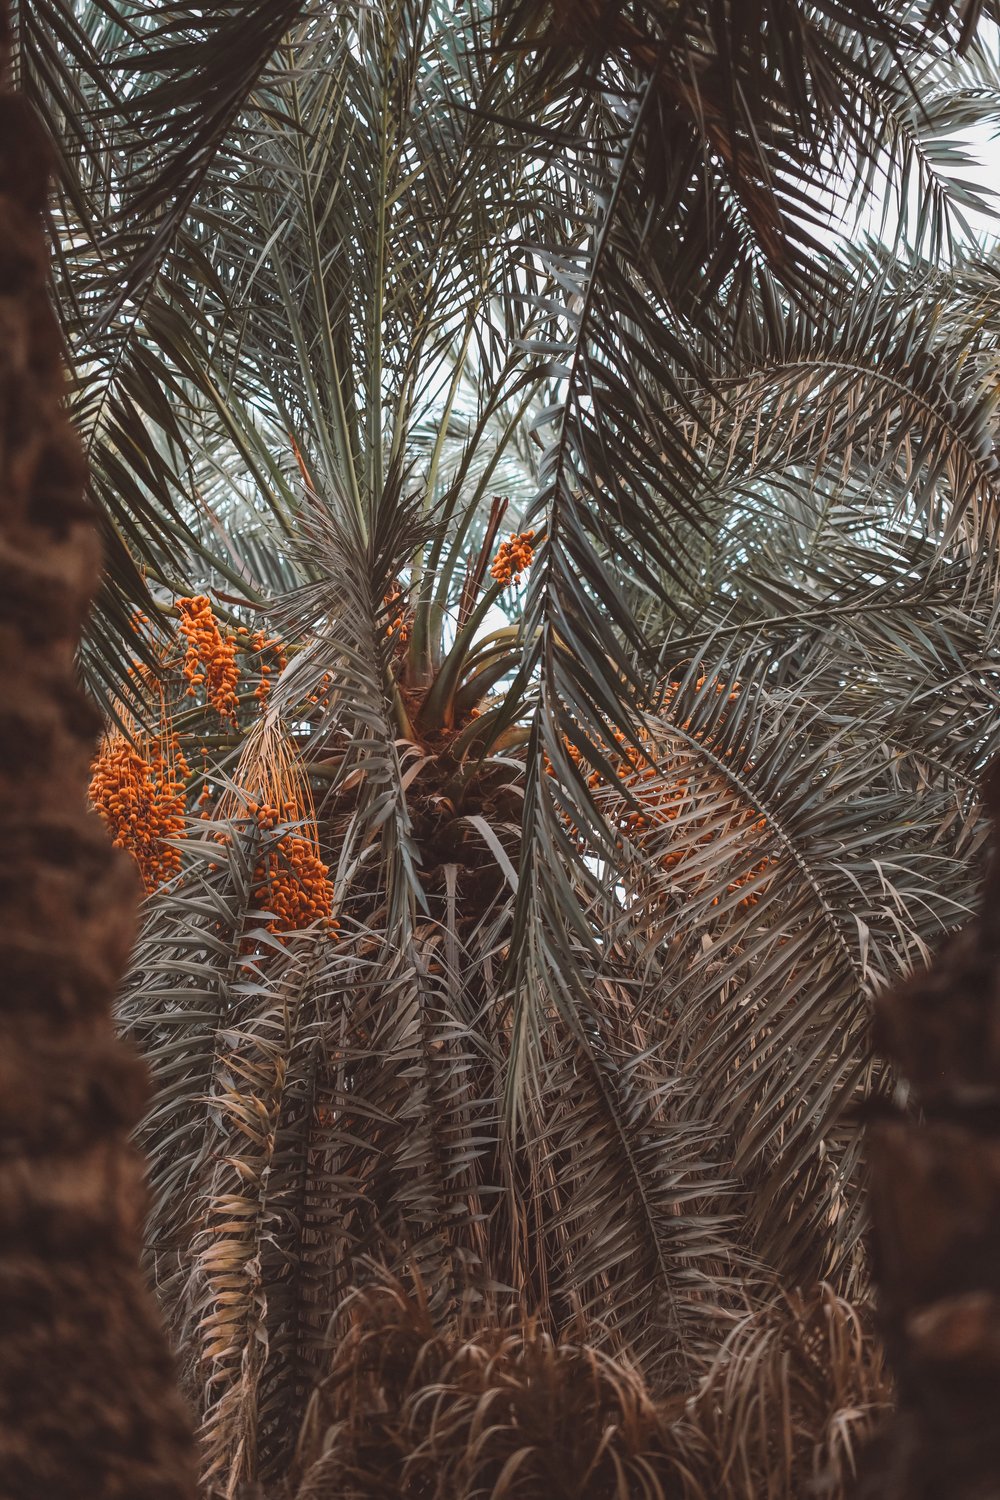 Palms and dates - Siwa Oasis - Egypt